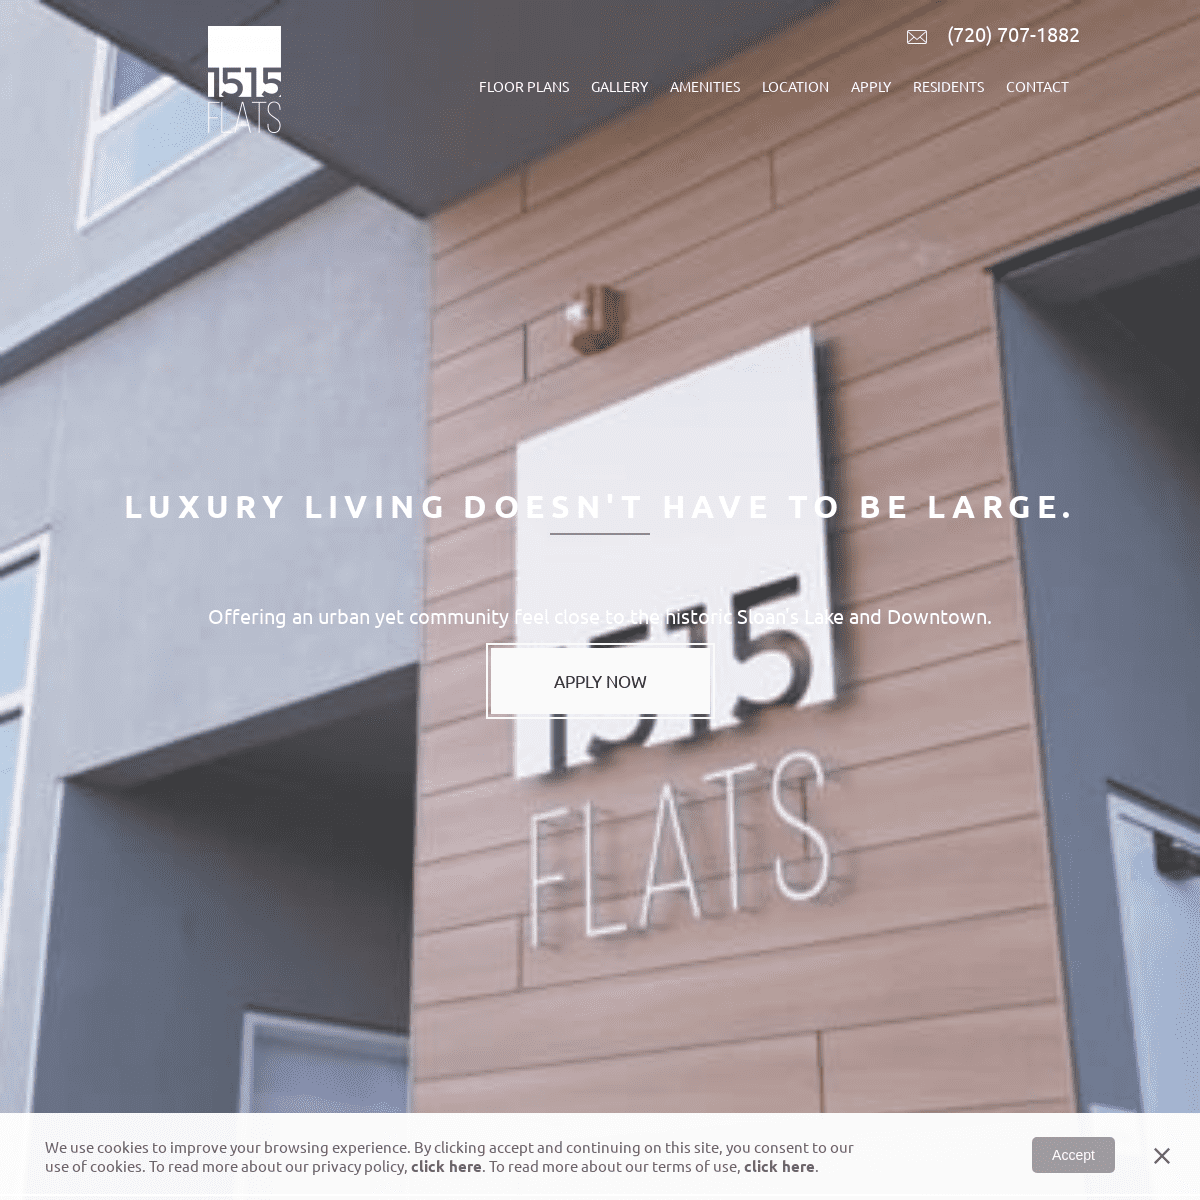 1515 Flats | Apartments in Denver, CO